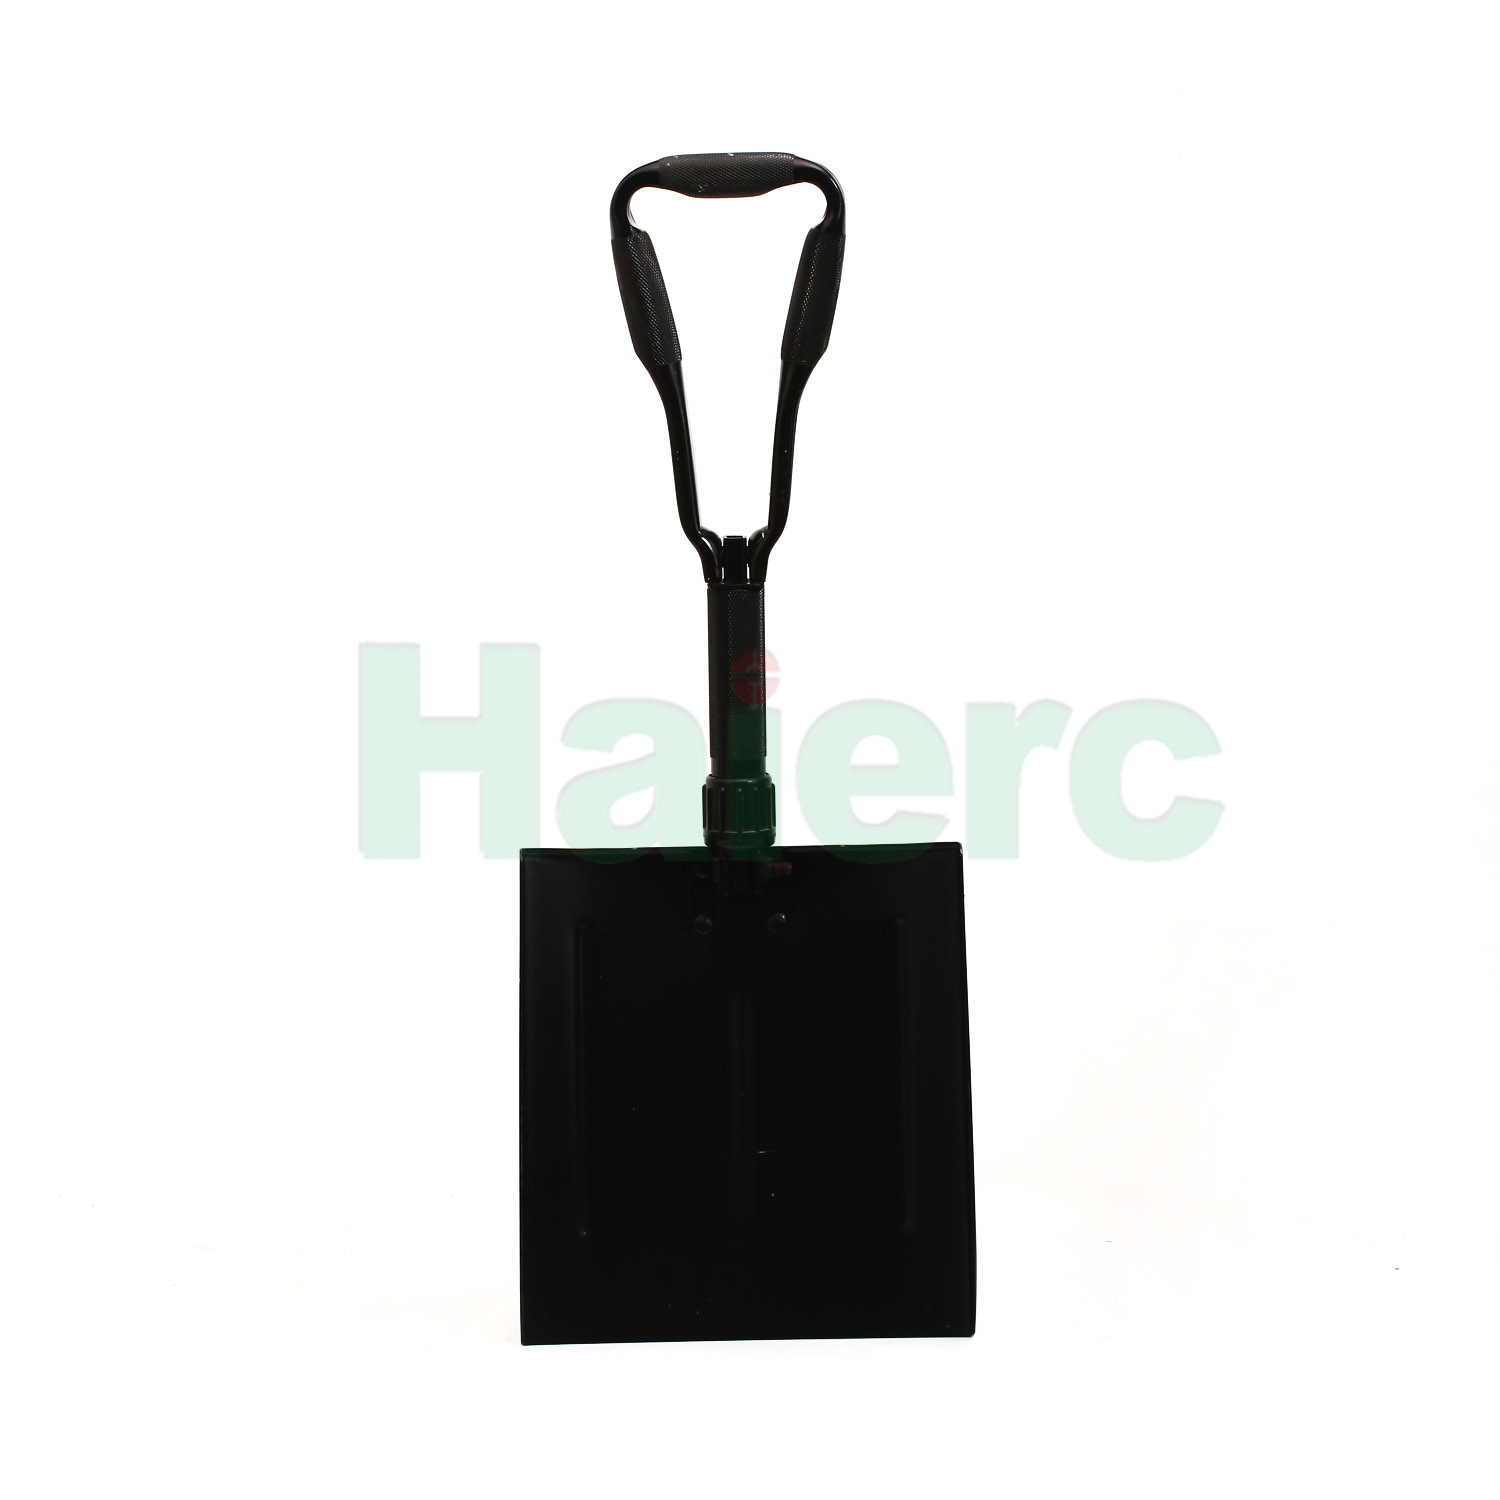 >Haierc Heavy Duty Entrenching Tool for Camping Gardening Beach Folding Shovel Camping Shovel Snow Shovel